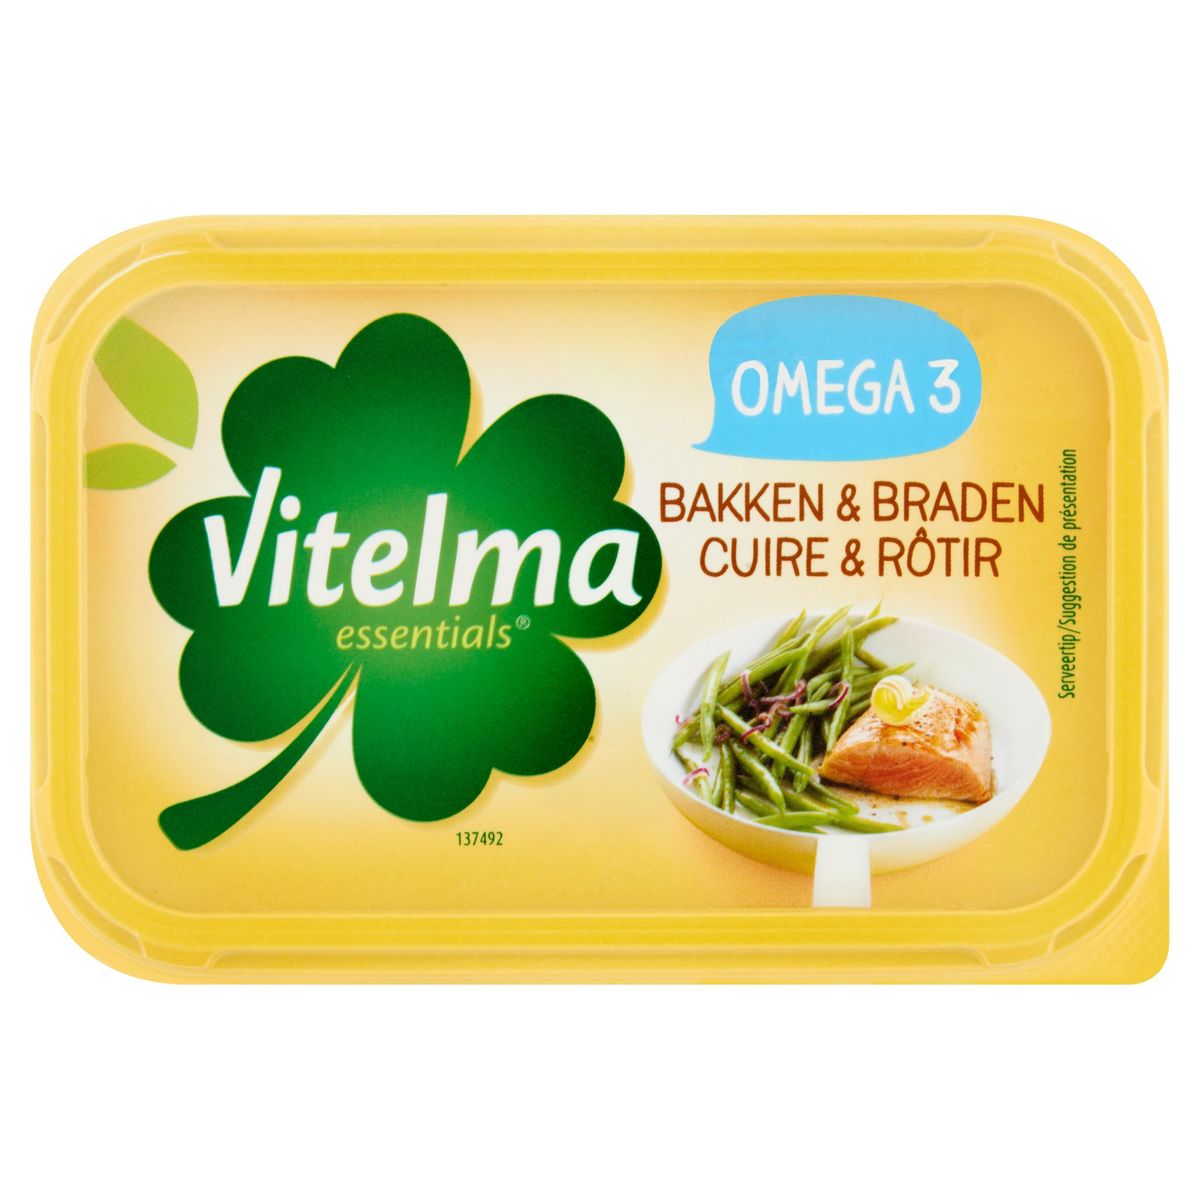 Vitelma Essentials Omega 3 Cuire & Rôtir 500 g